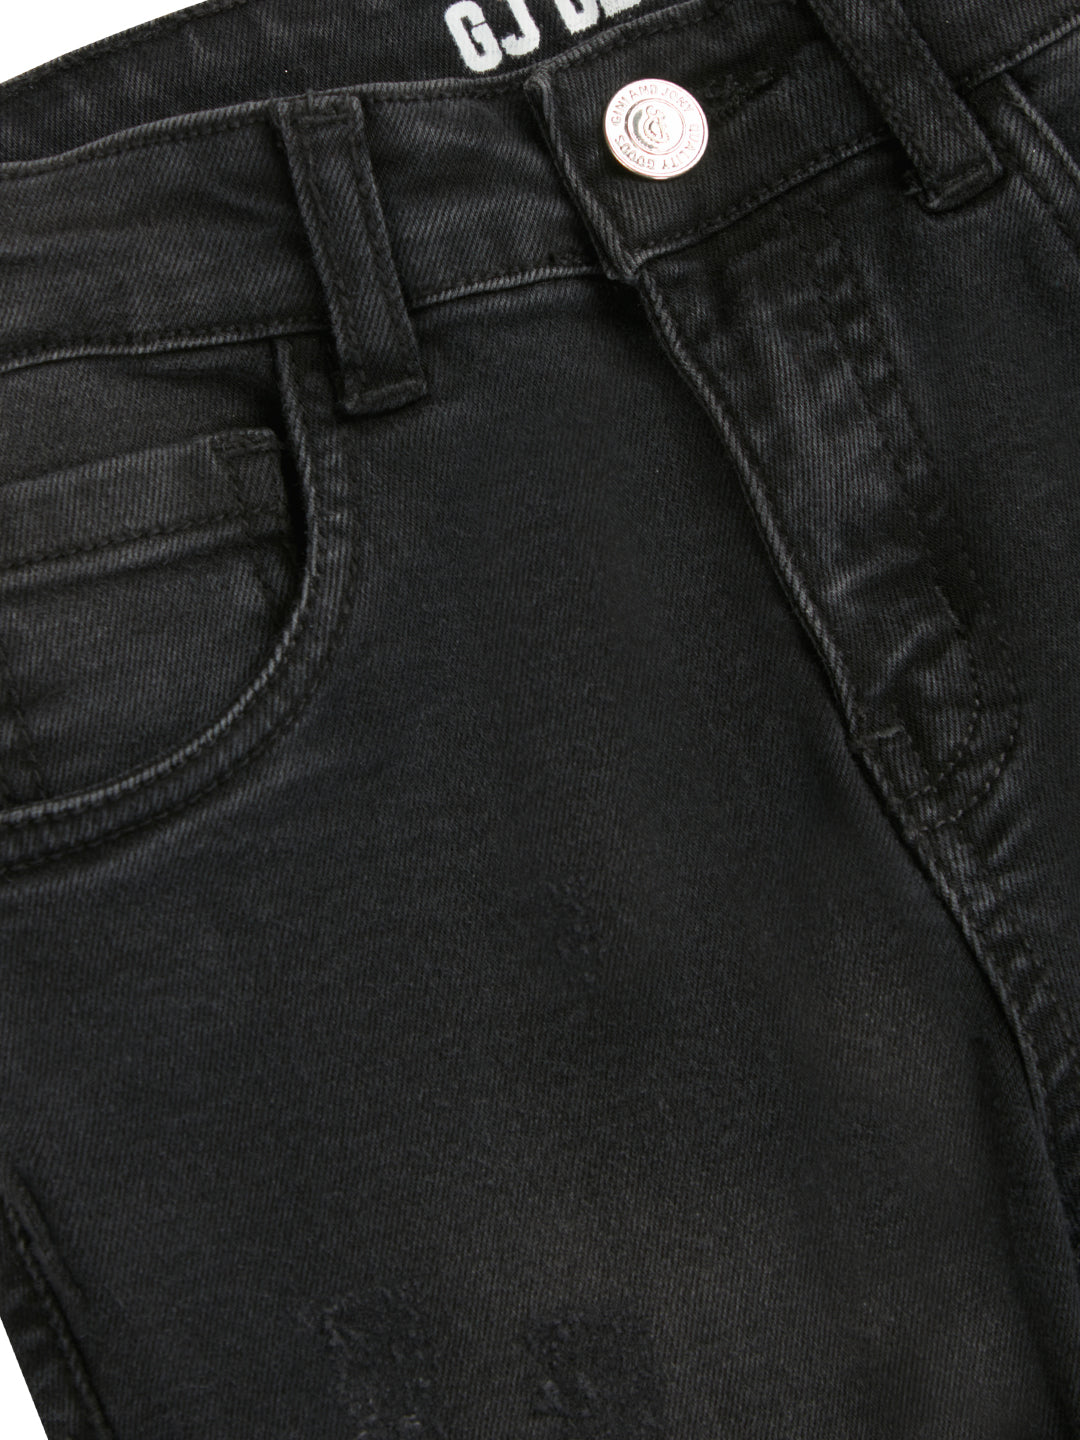 Boys Black Printed Denim Fixed Waist Jeans